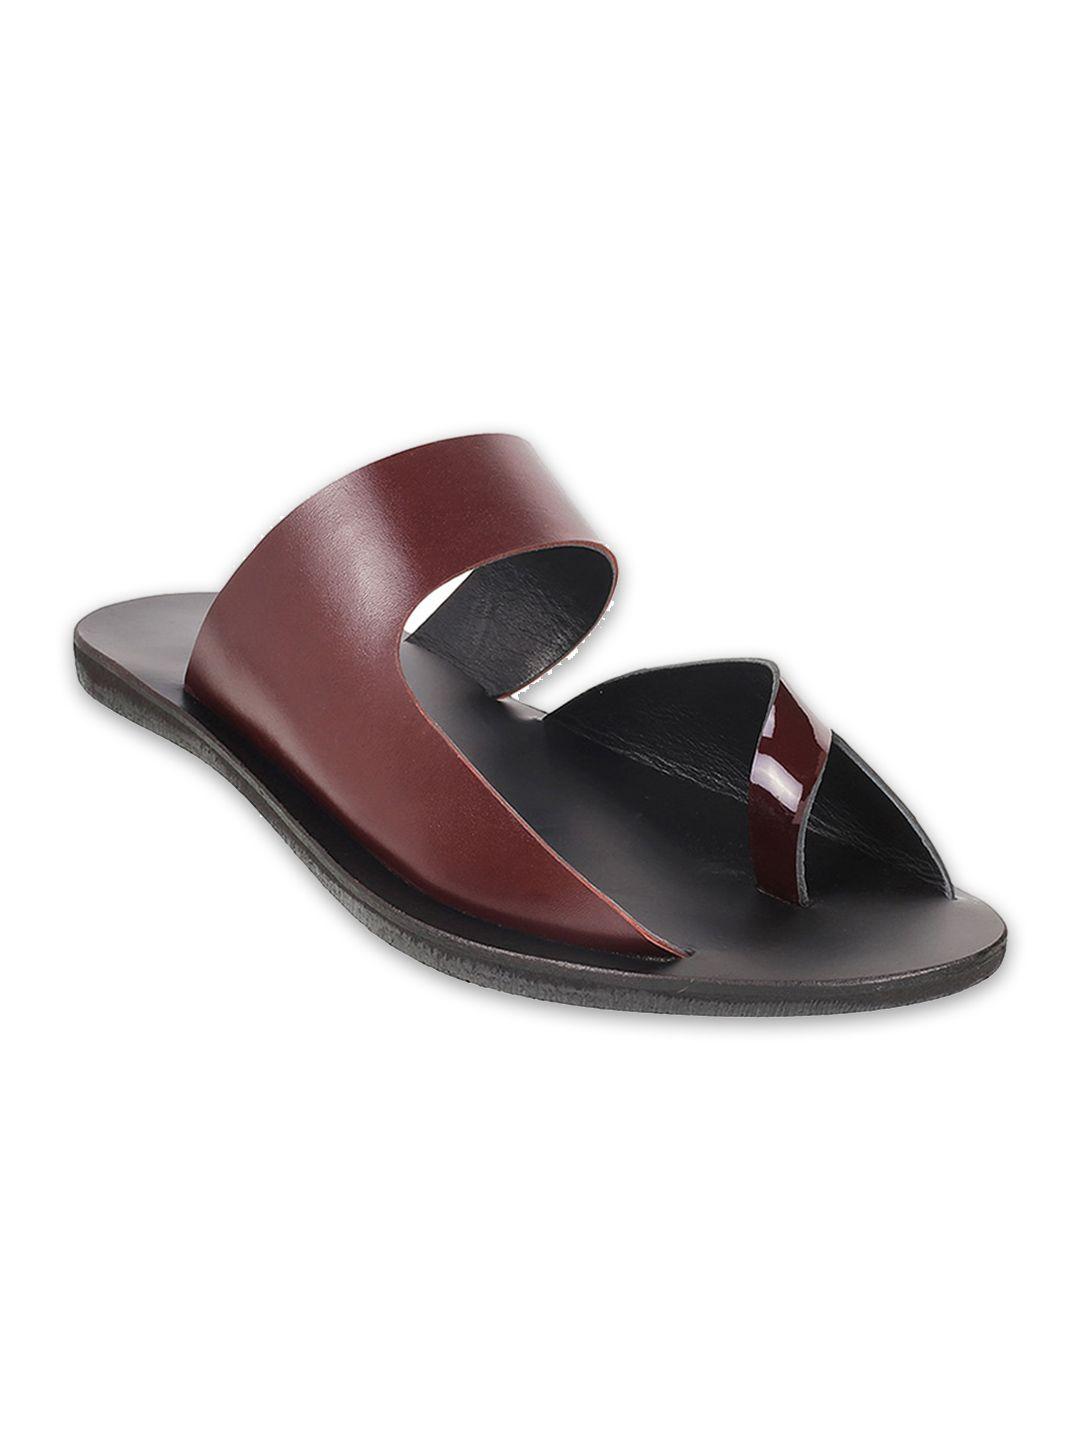 mochi men maroon & black leather comfort sandals